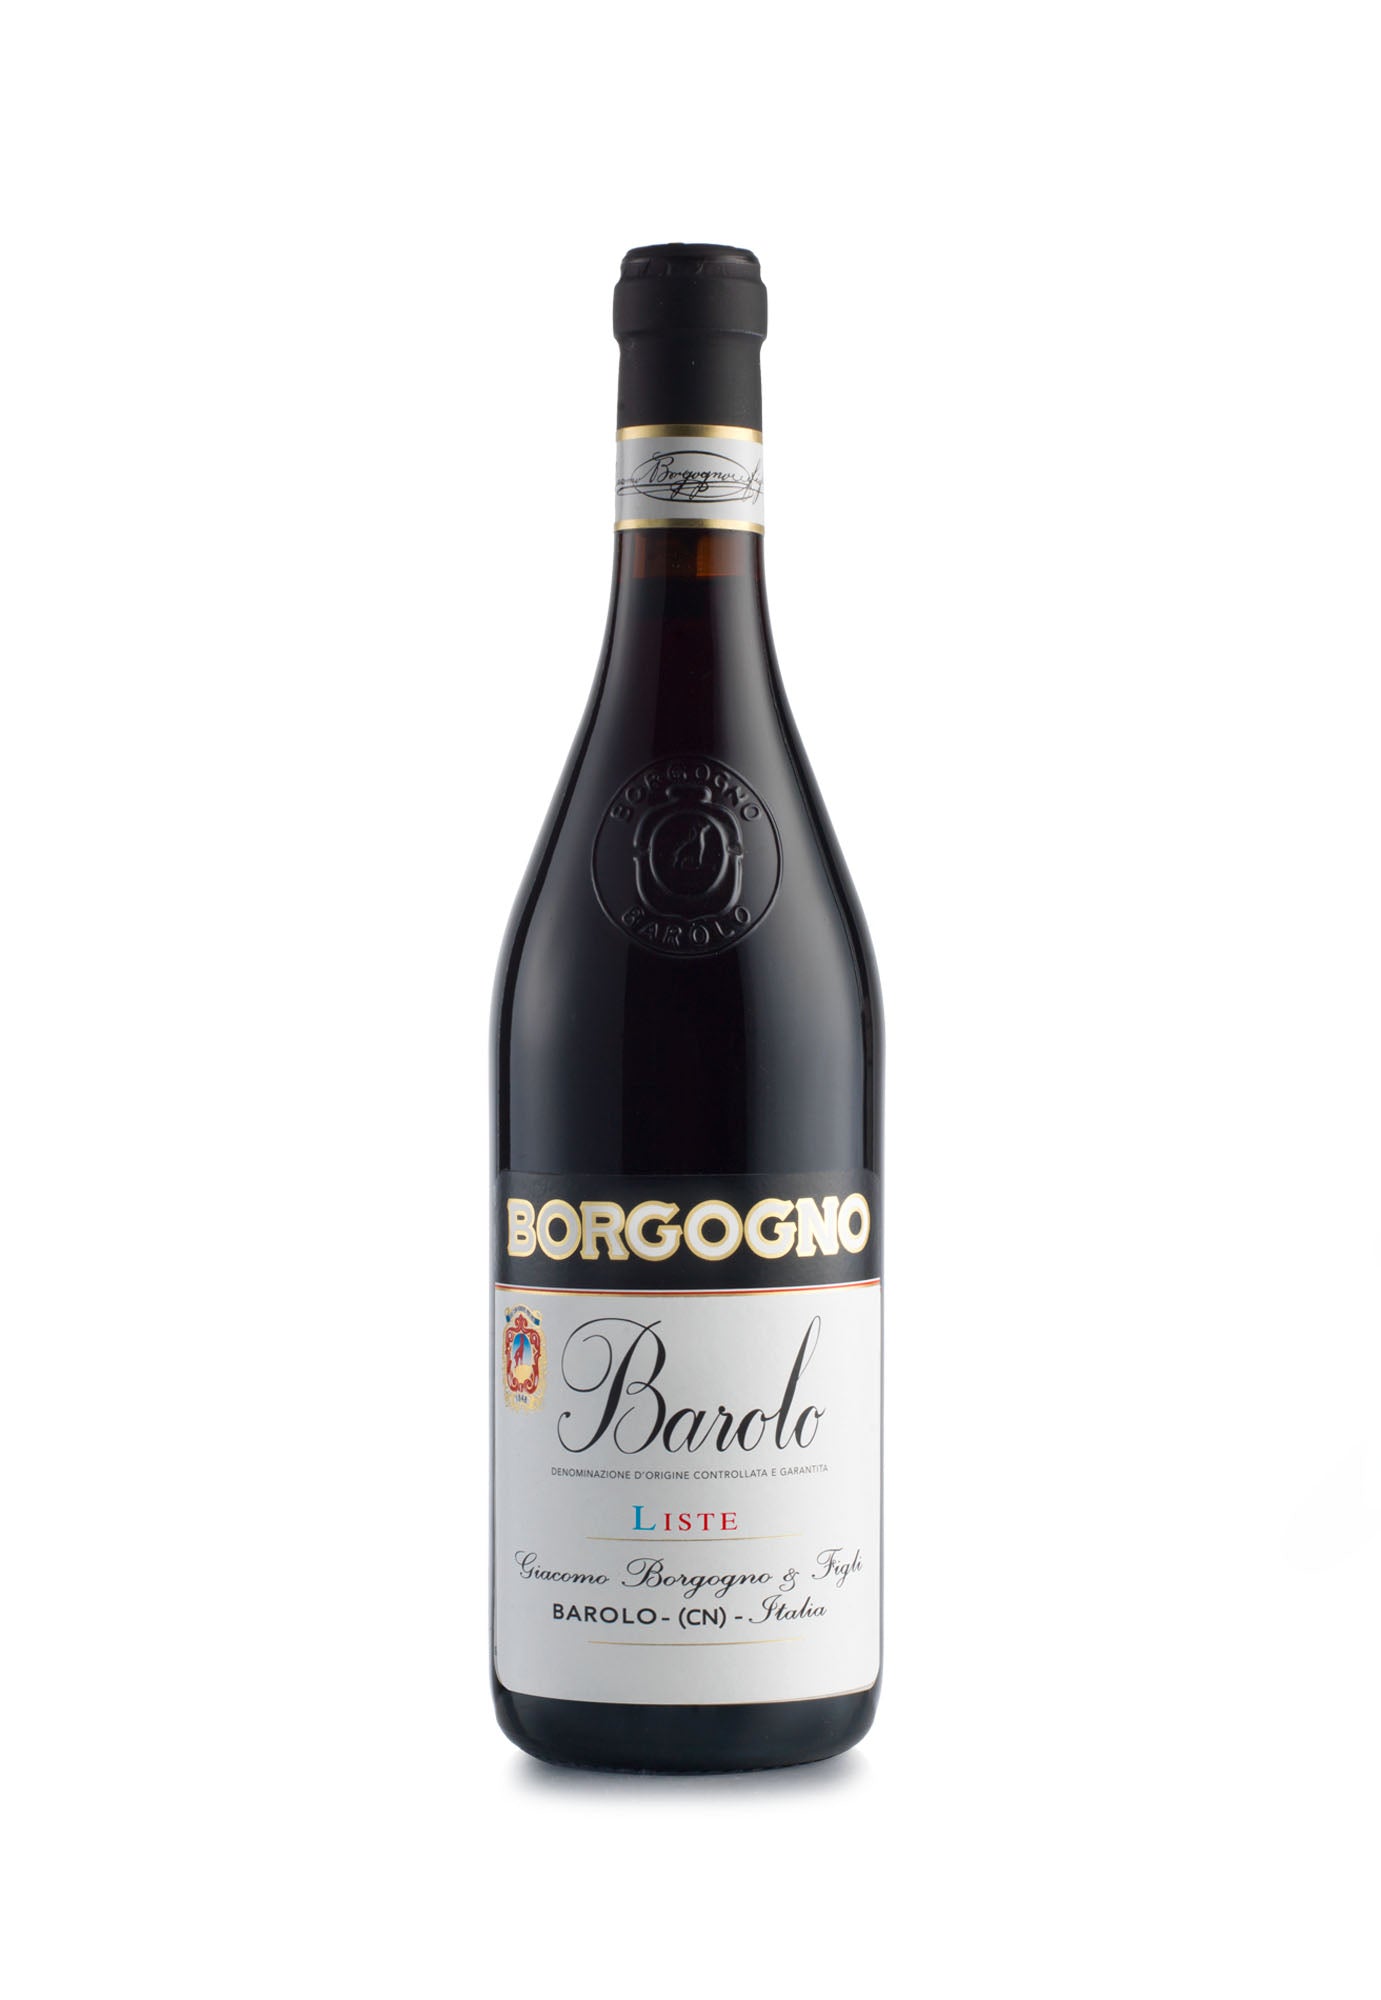 Borgogno Barolo Liste 2015